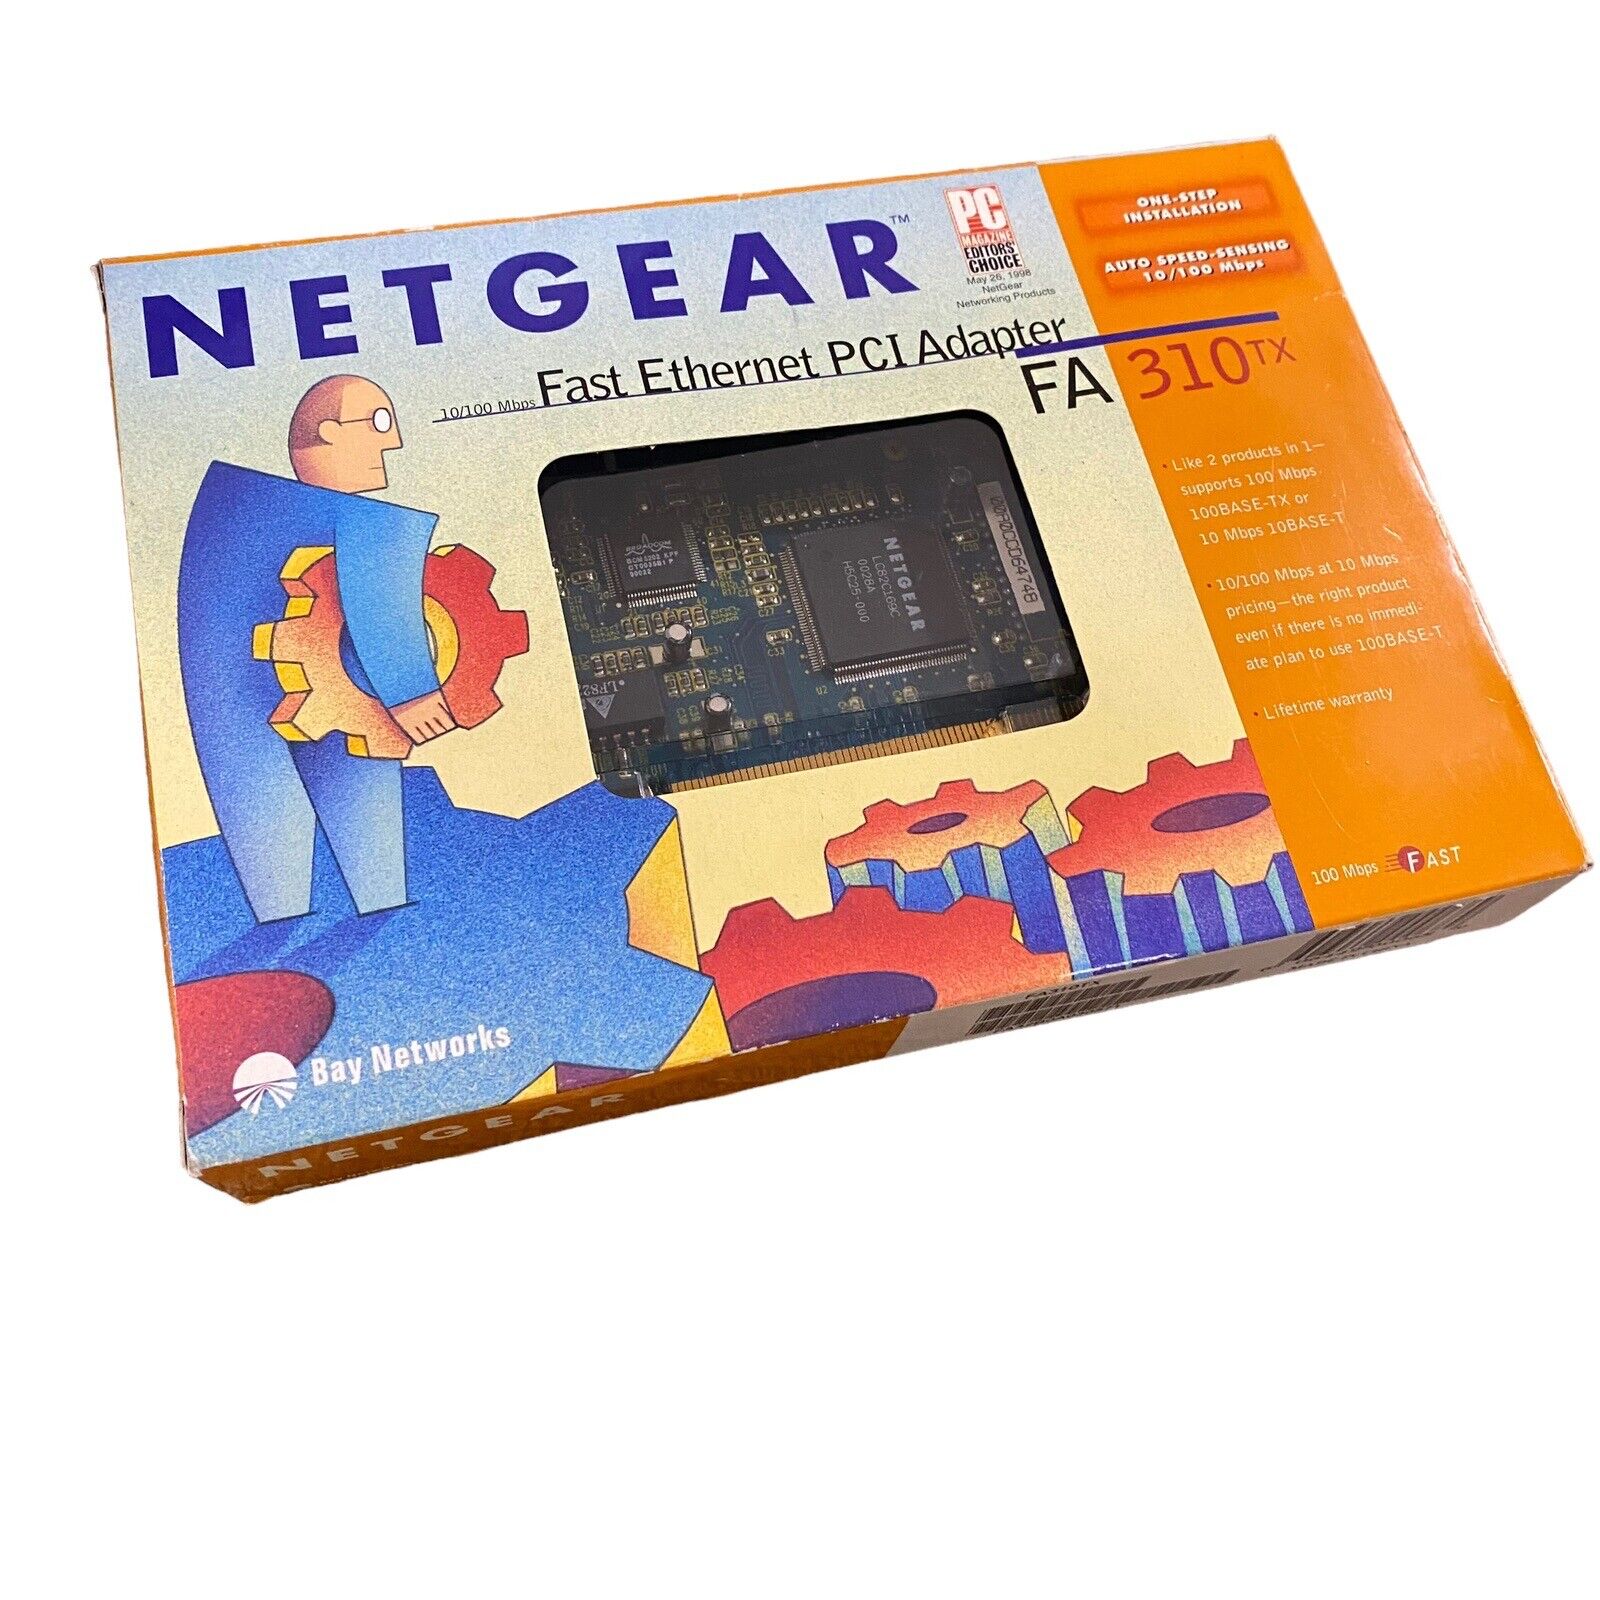 NETGEAR 10/100 Nbps Fast Ethernet PCI Adapter FA310TX